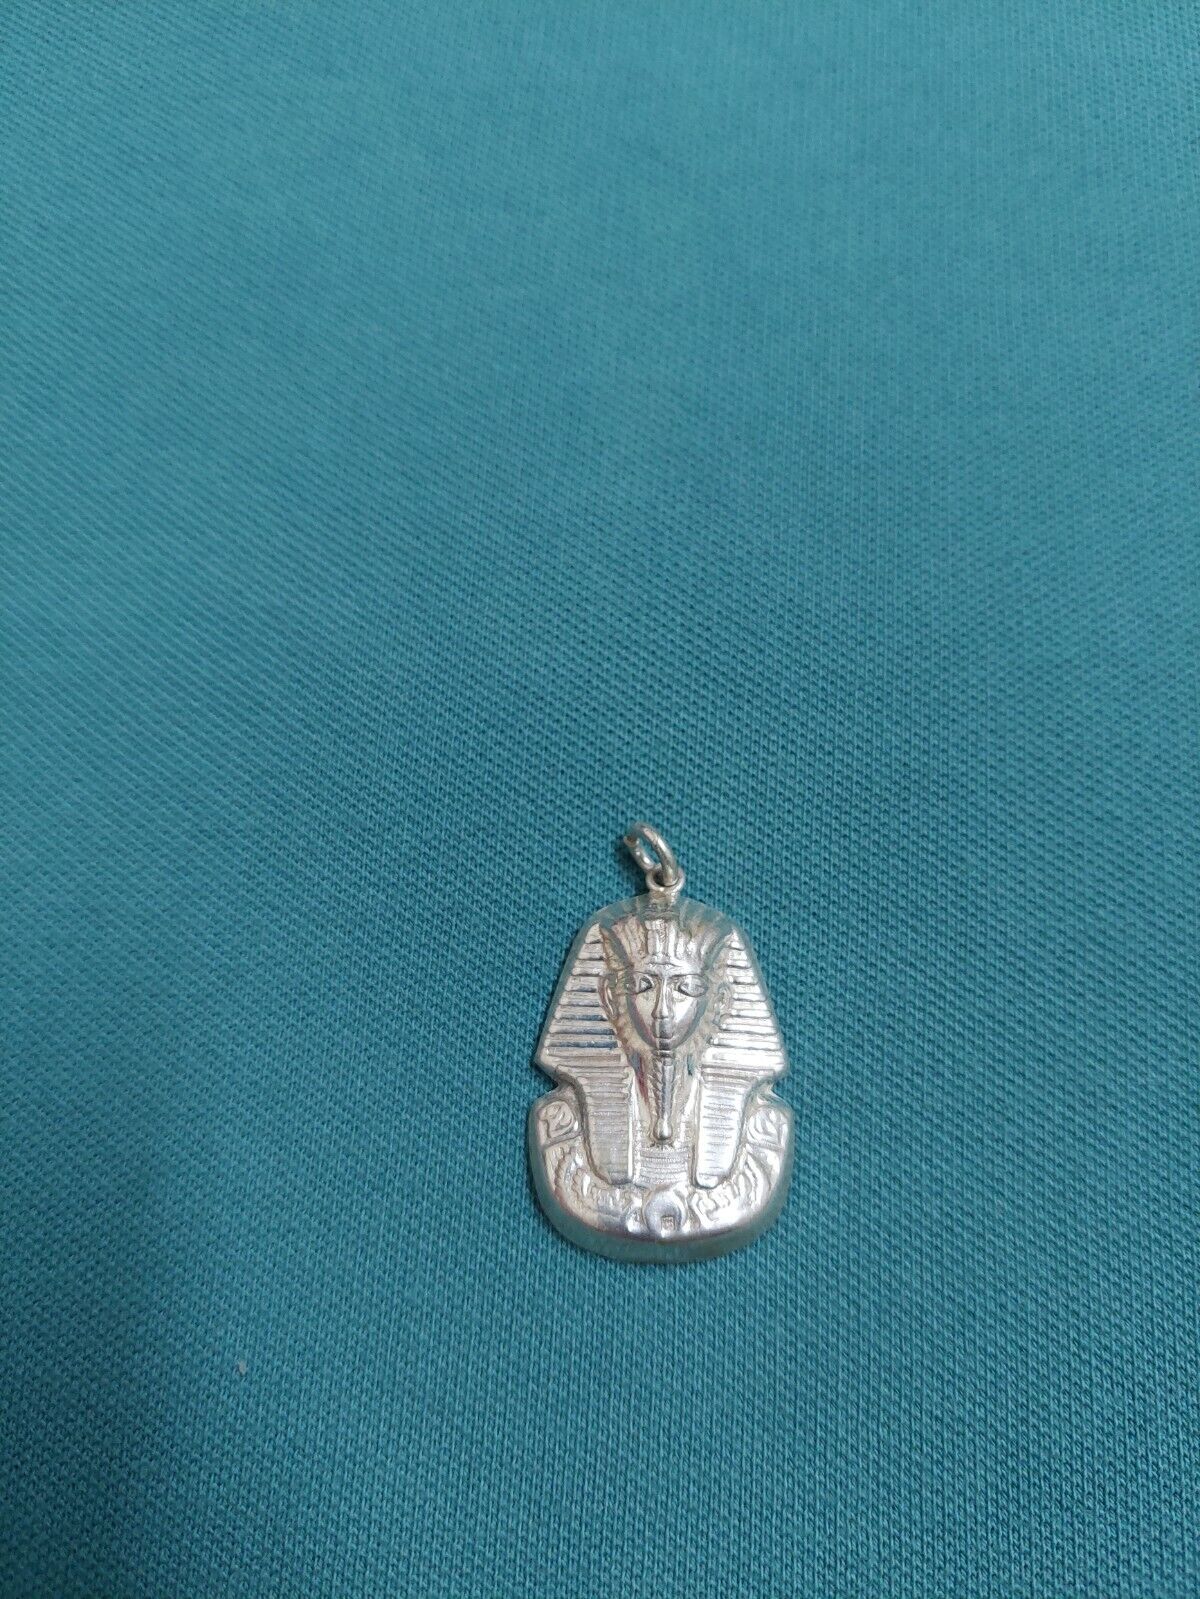 King tutankhamun Silver pendant 100 % Egyptian handmade